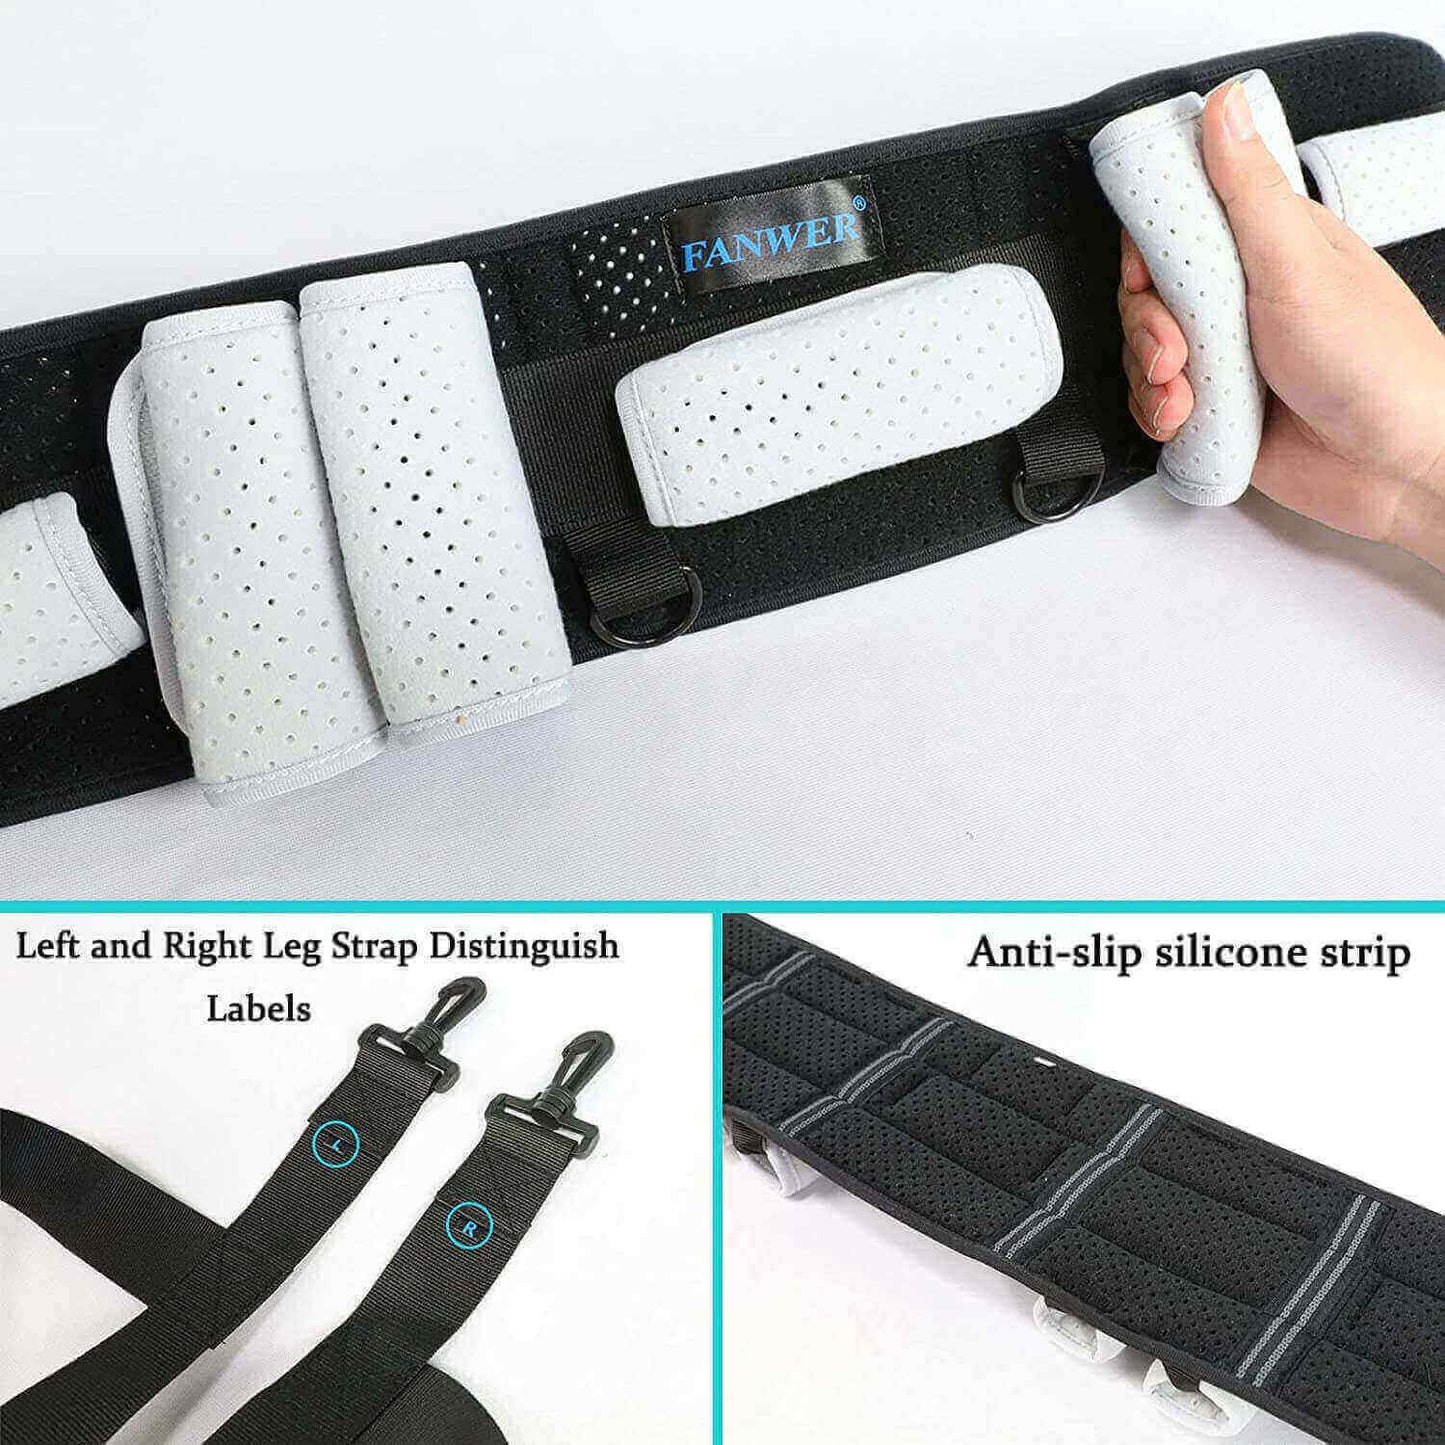 Fanwer transfer gait belt with handles & leg straps for transfer aids, padded gait belt details